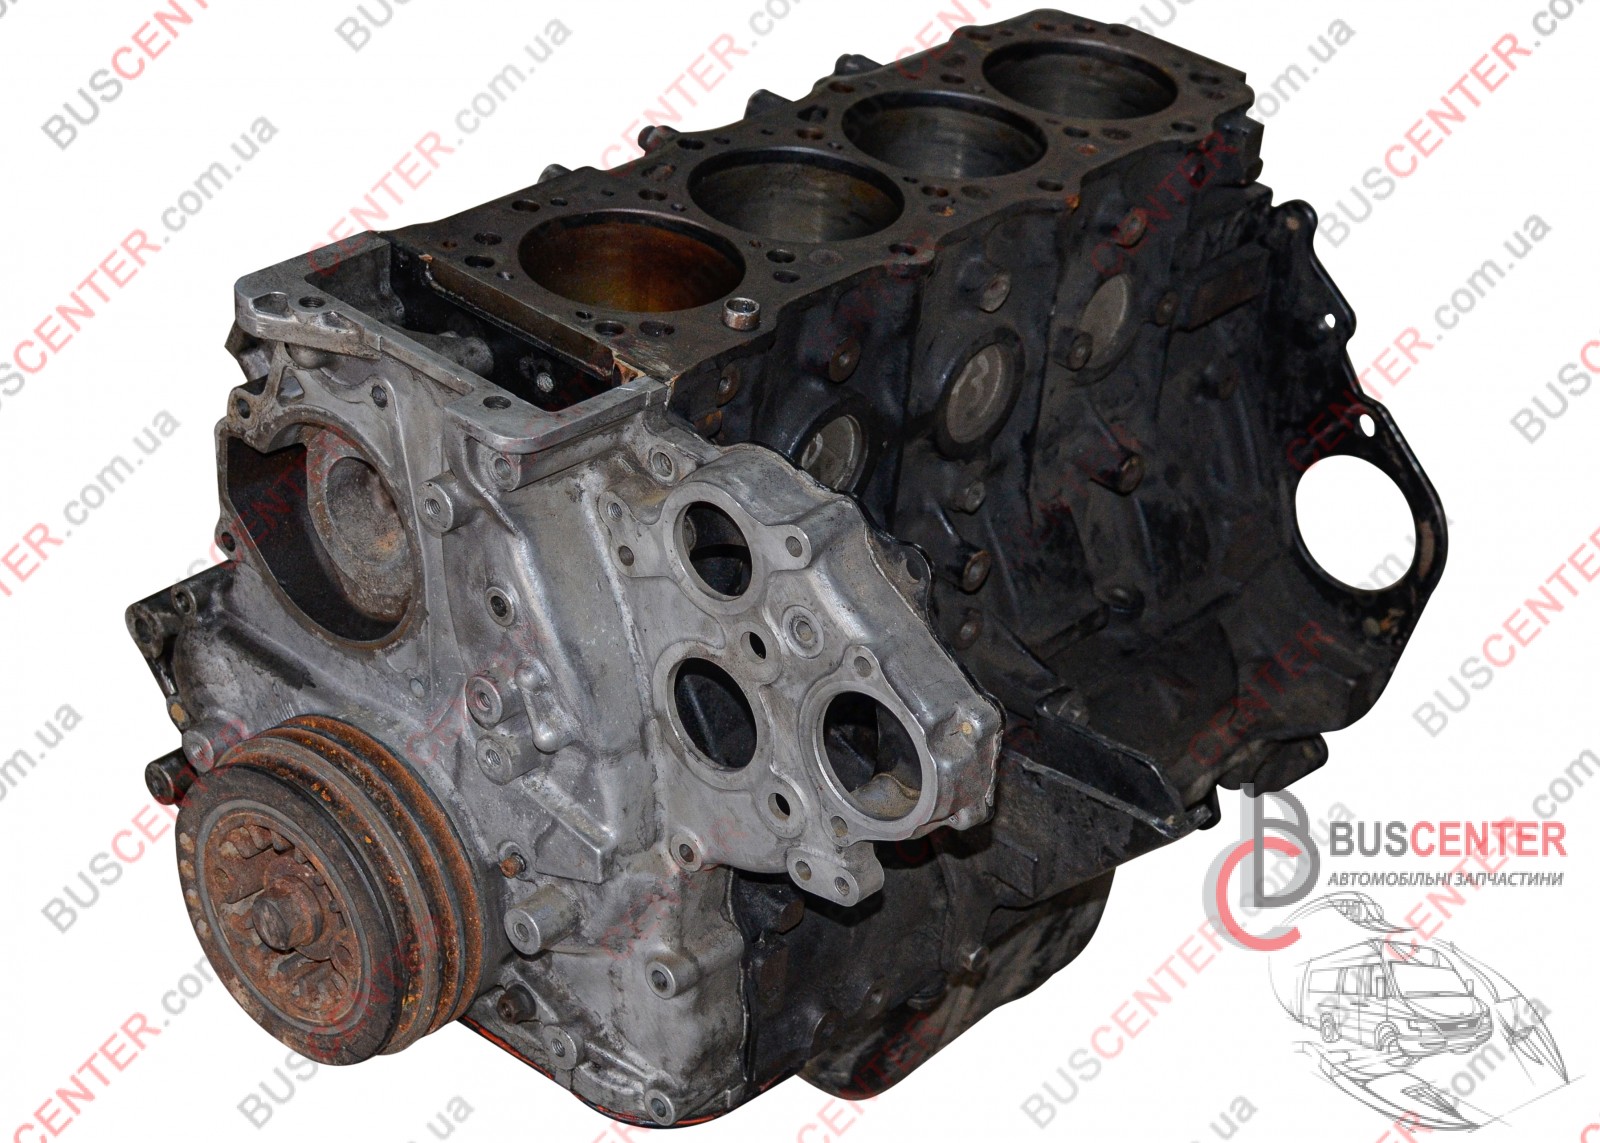 Блок двигателя в сборе (Mitsubishi Pajero Wagon 4 3.2 Diesel)